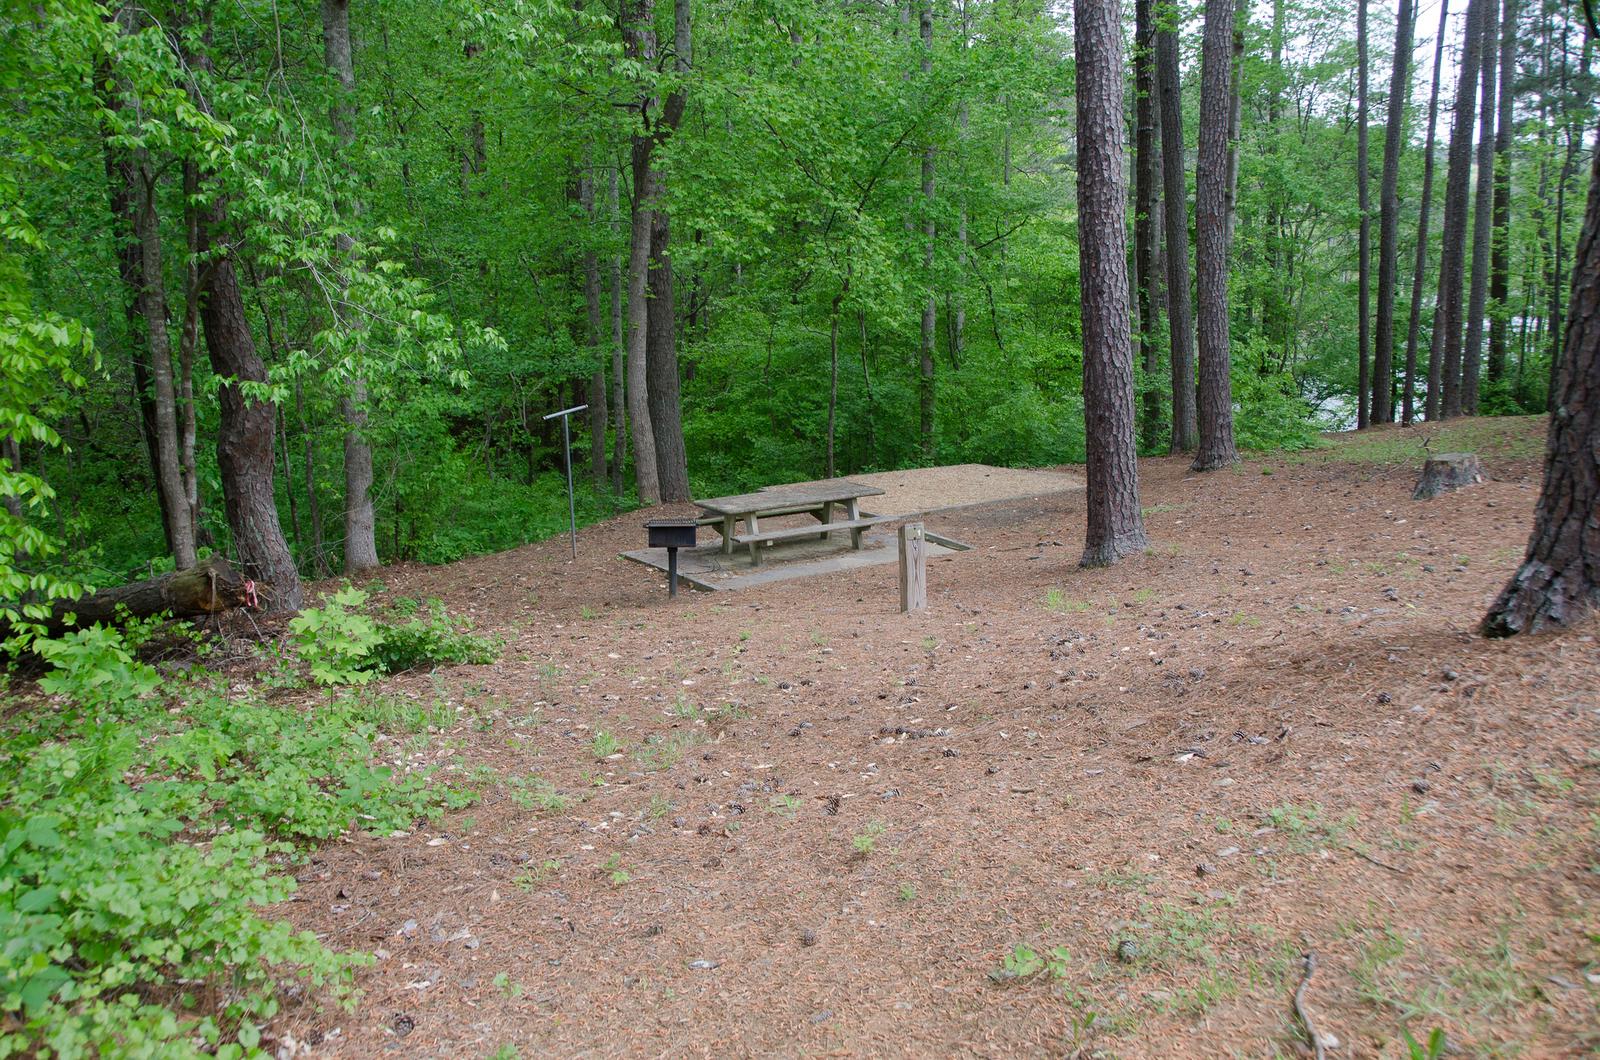 McKaskey Creek CG, table in the treesMcKaskey Creek Campground, campsite 1.